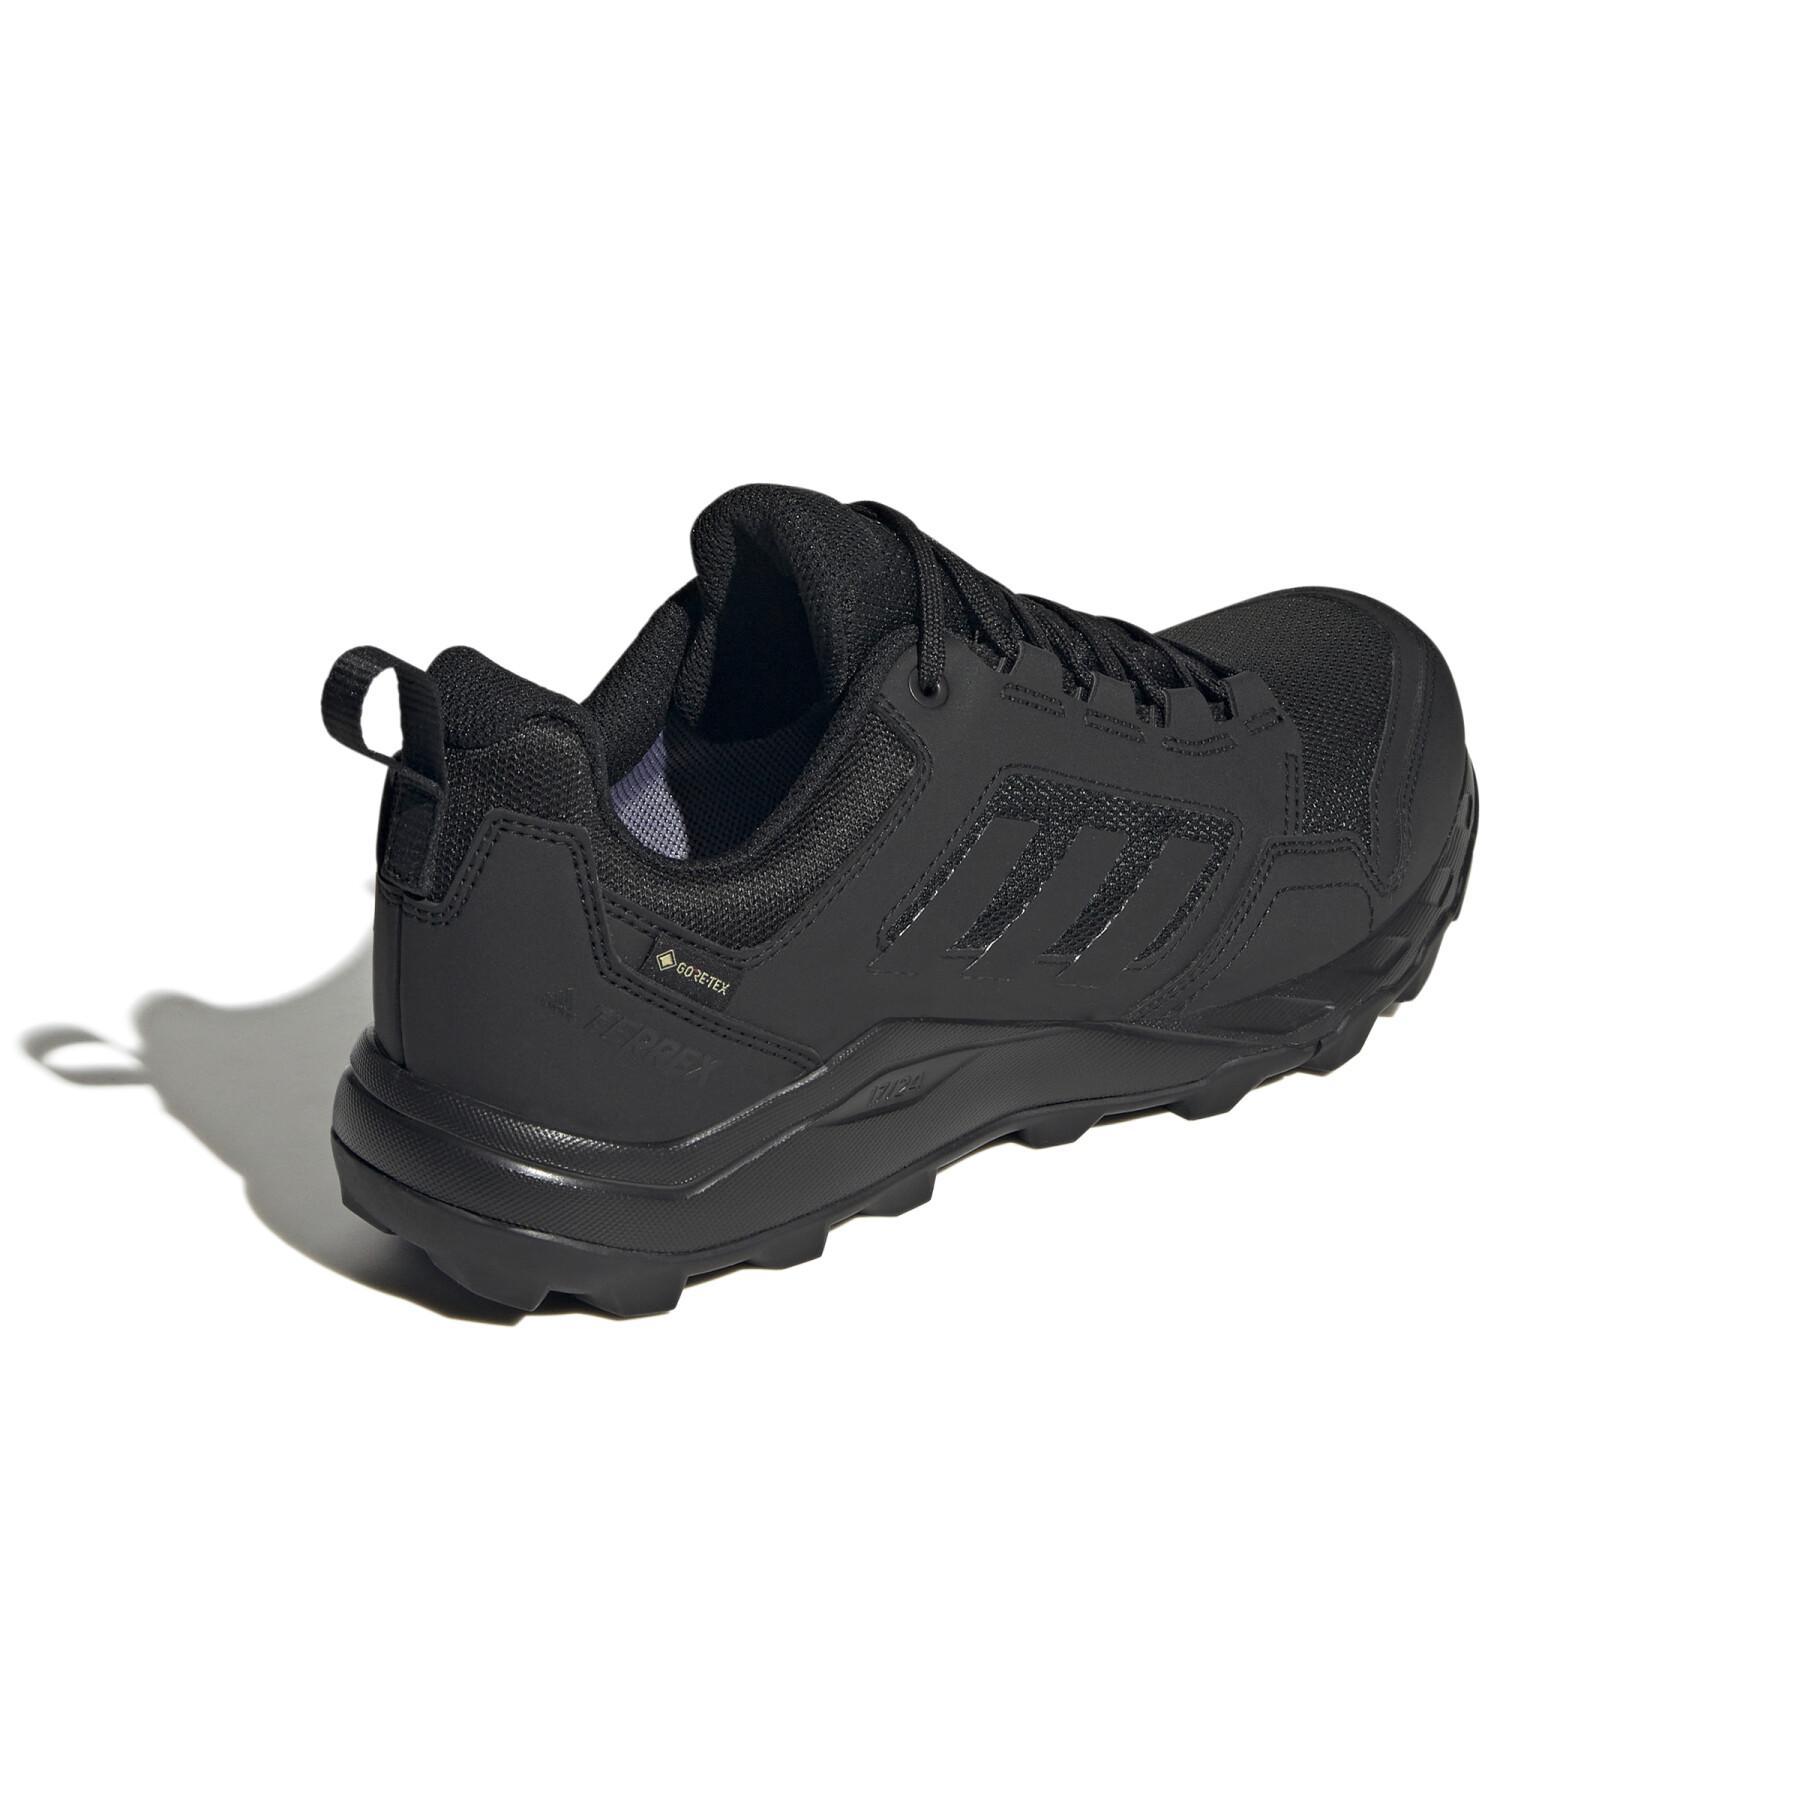 Trail running shoes adidas Terrex Tracerocker 2 Gtx